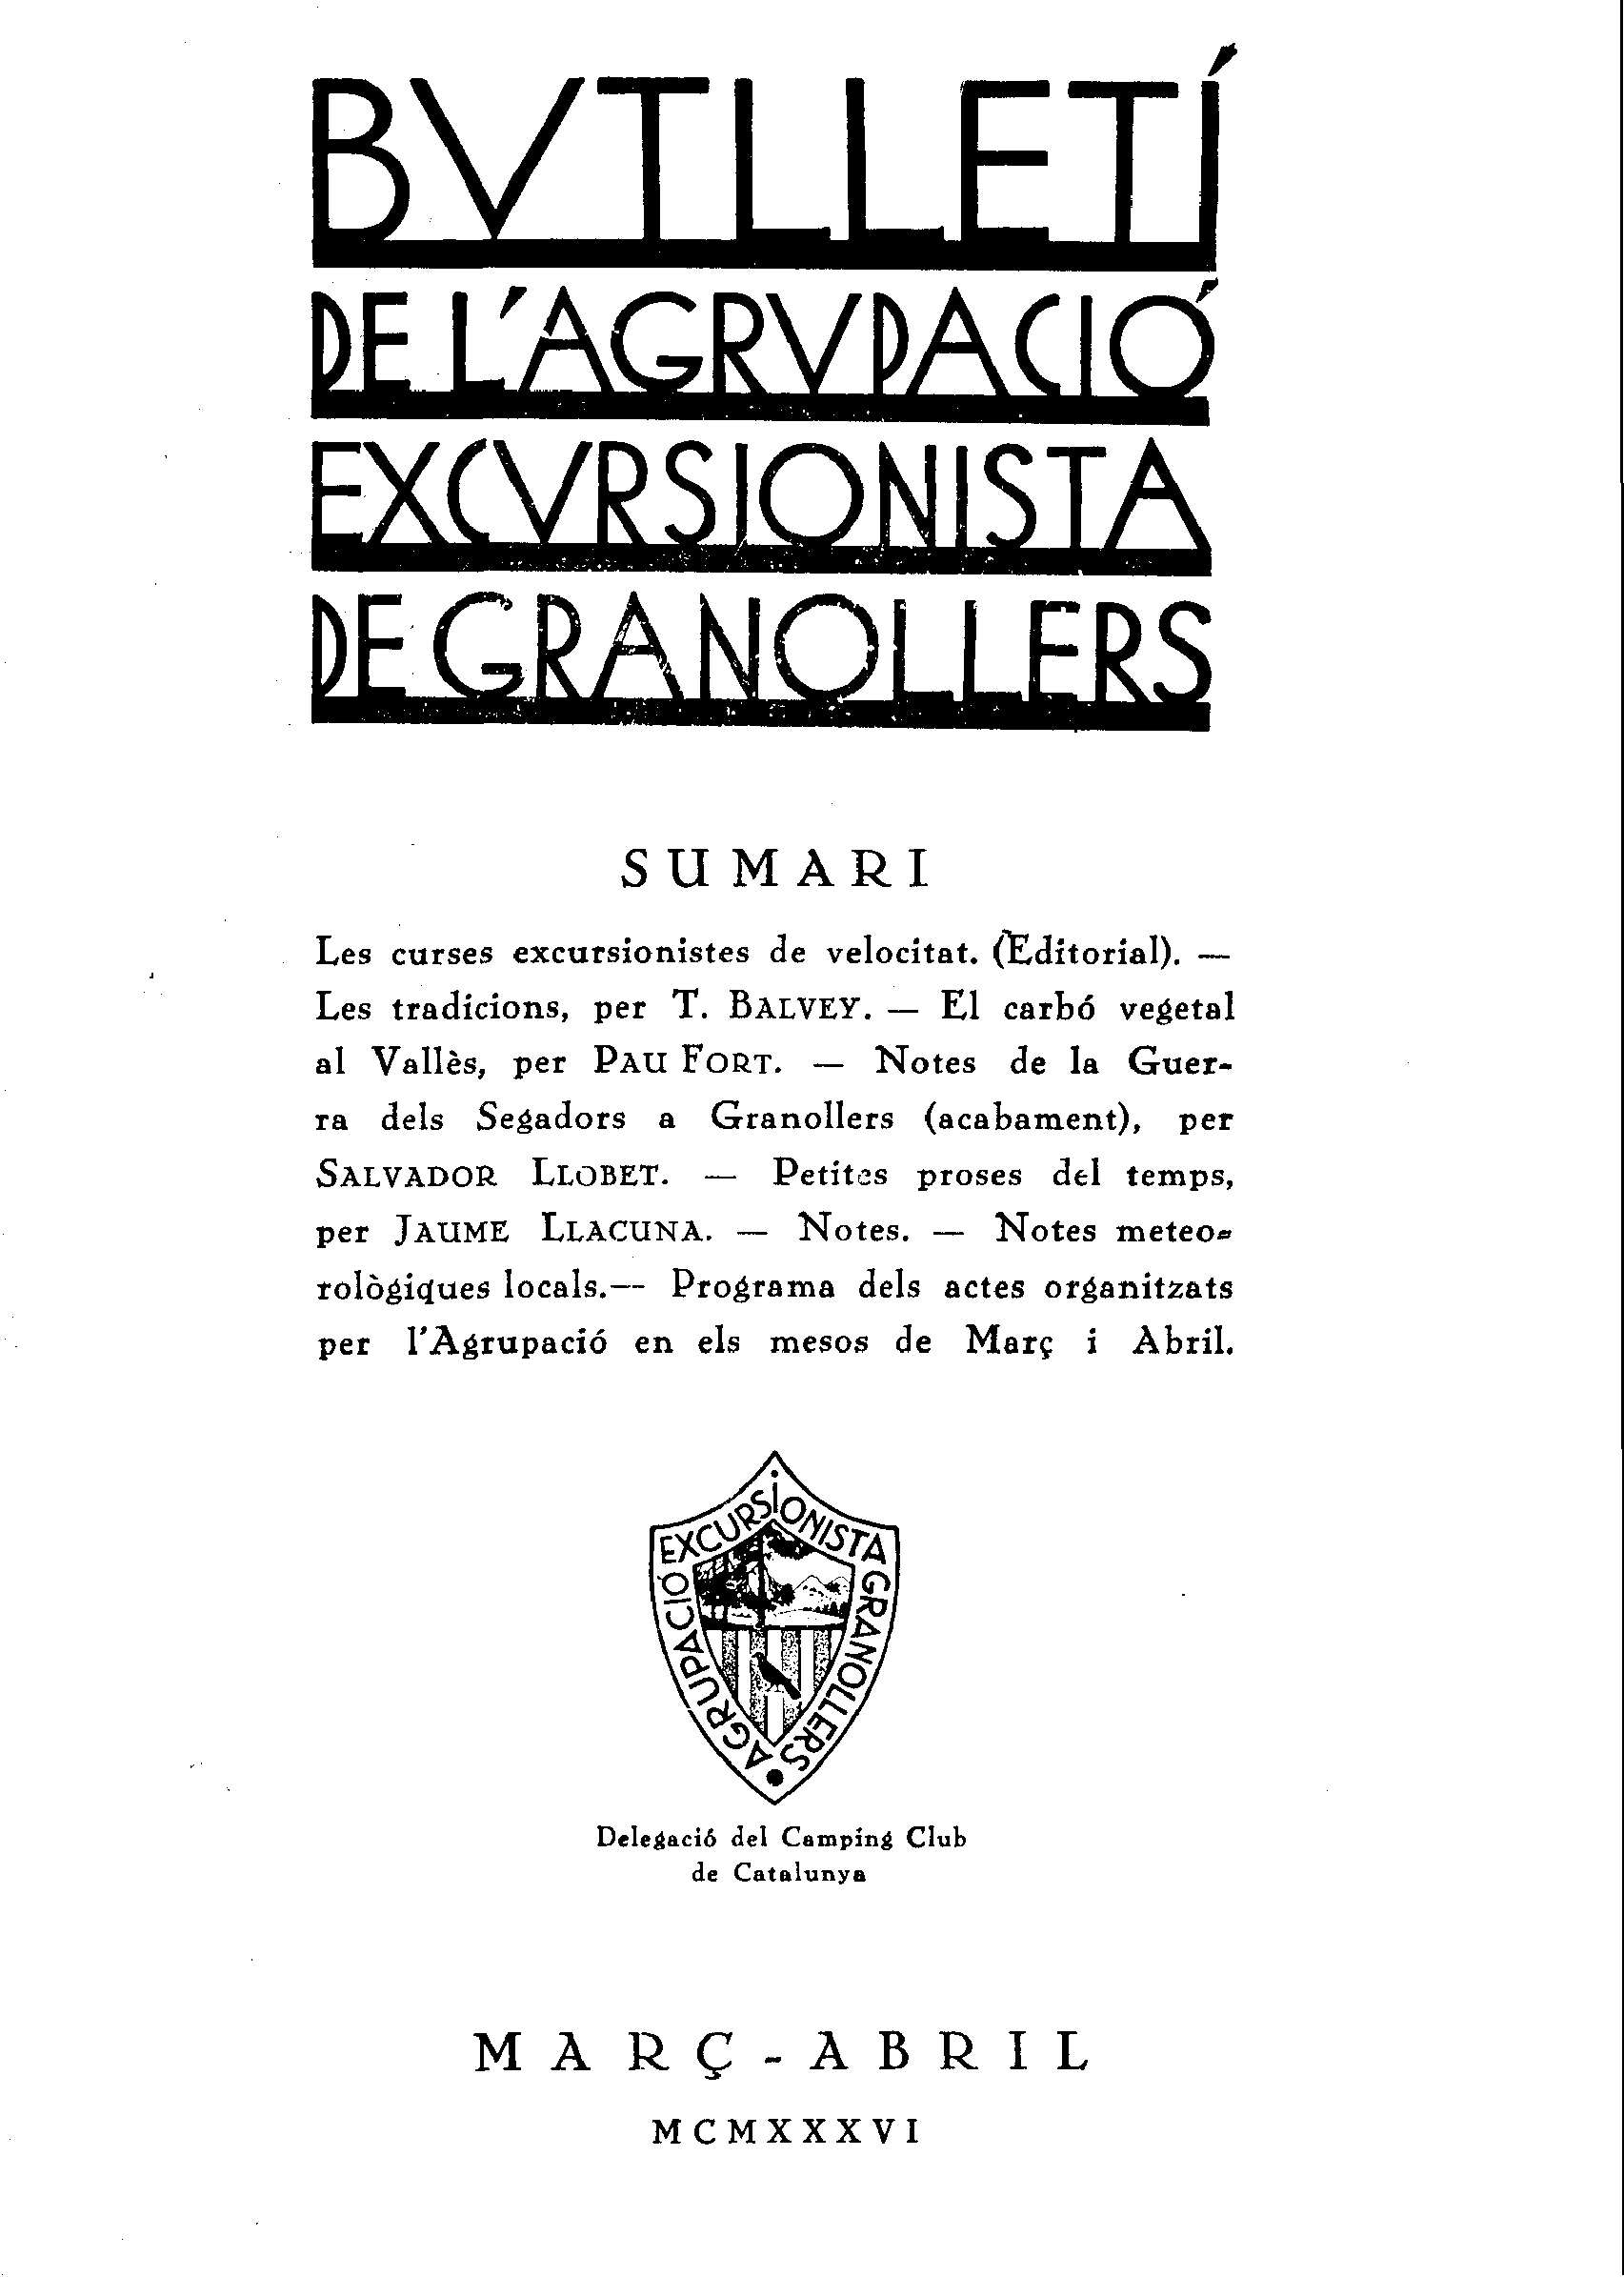 Butlletí de l'Agrupació Excursionista de Granollers, 1/3/1936 [Issue]